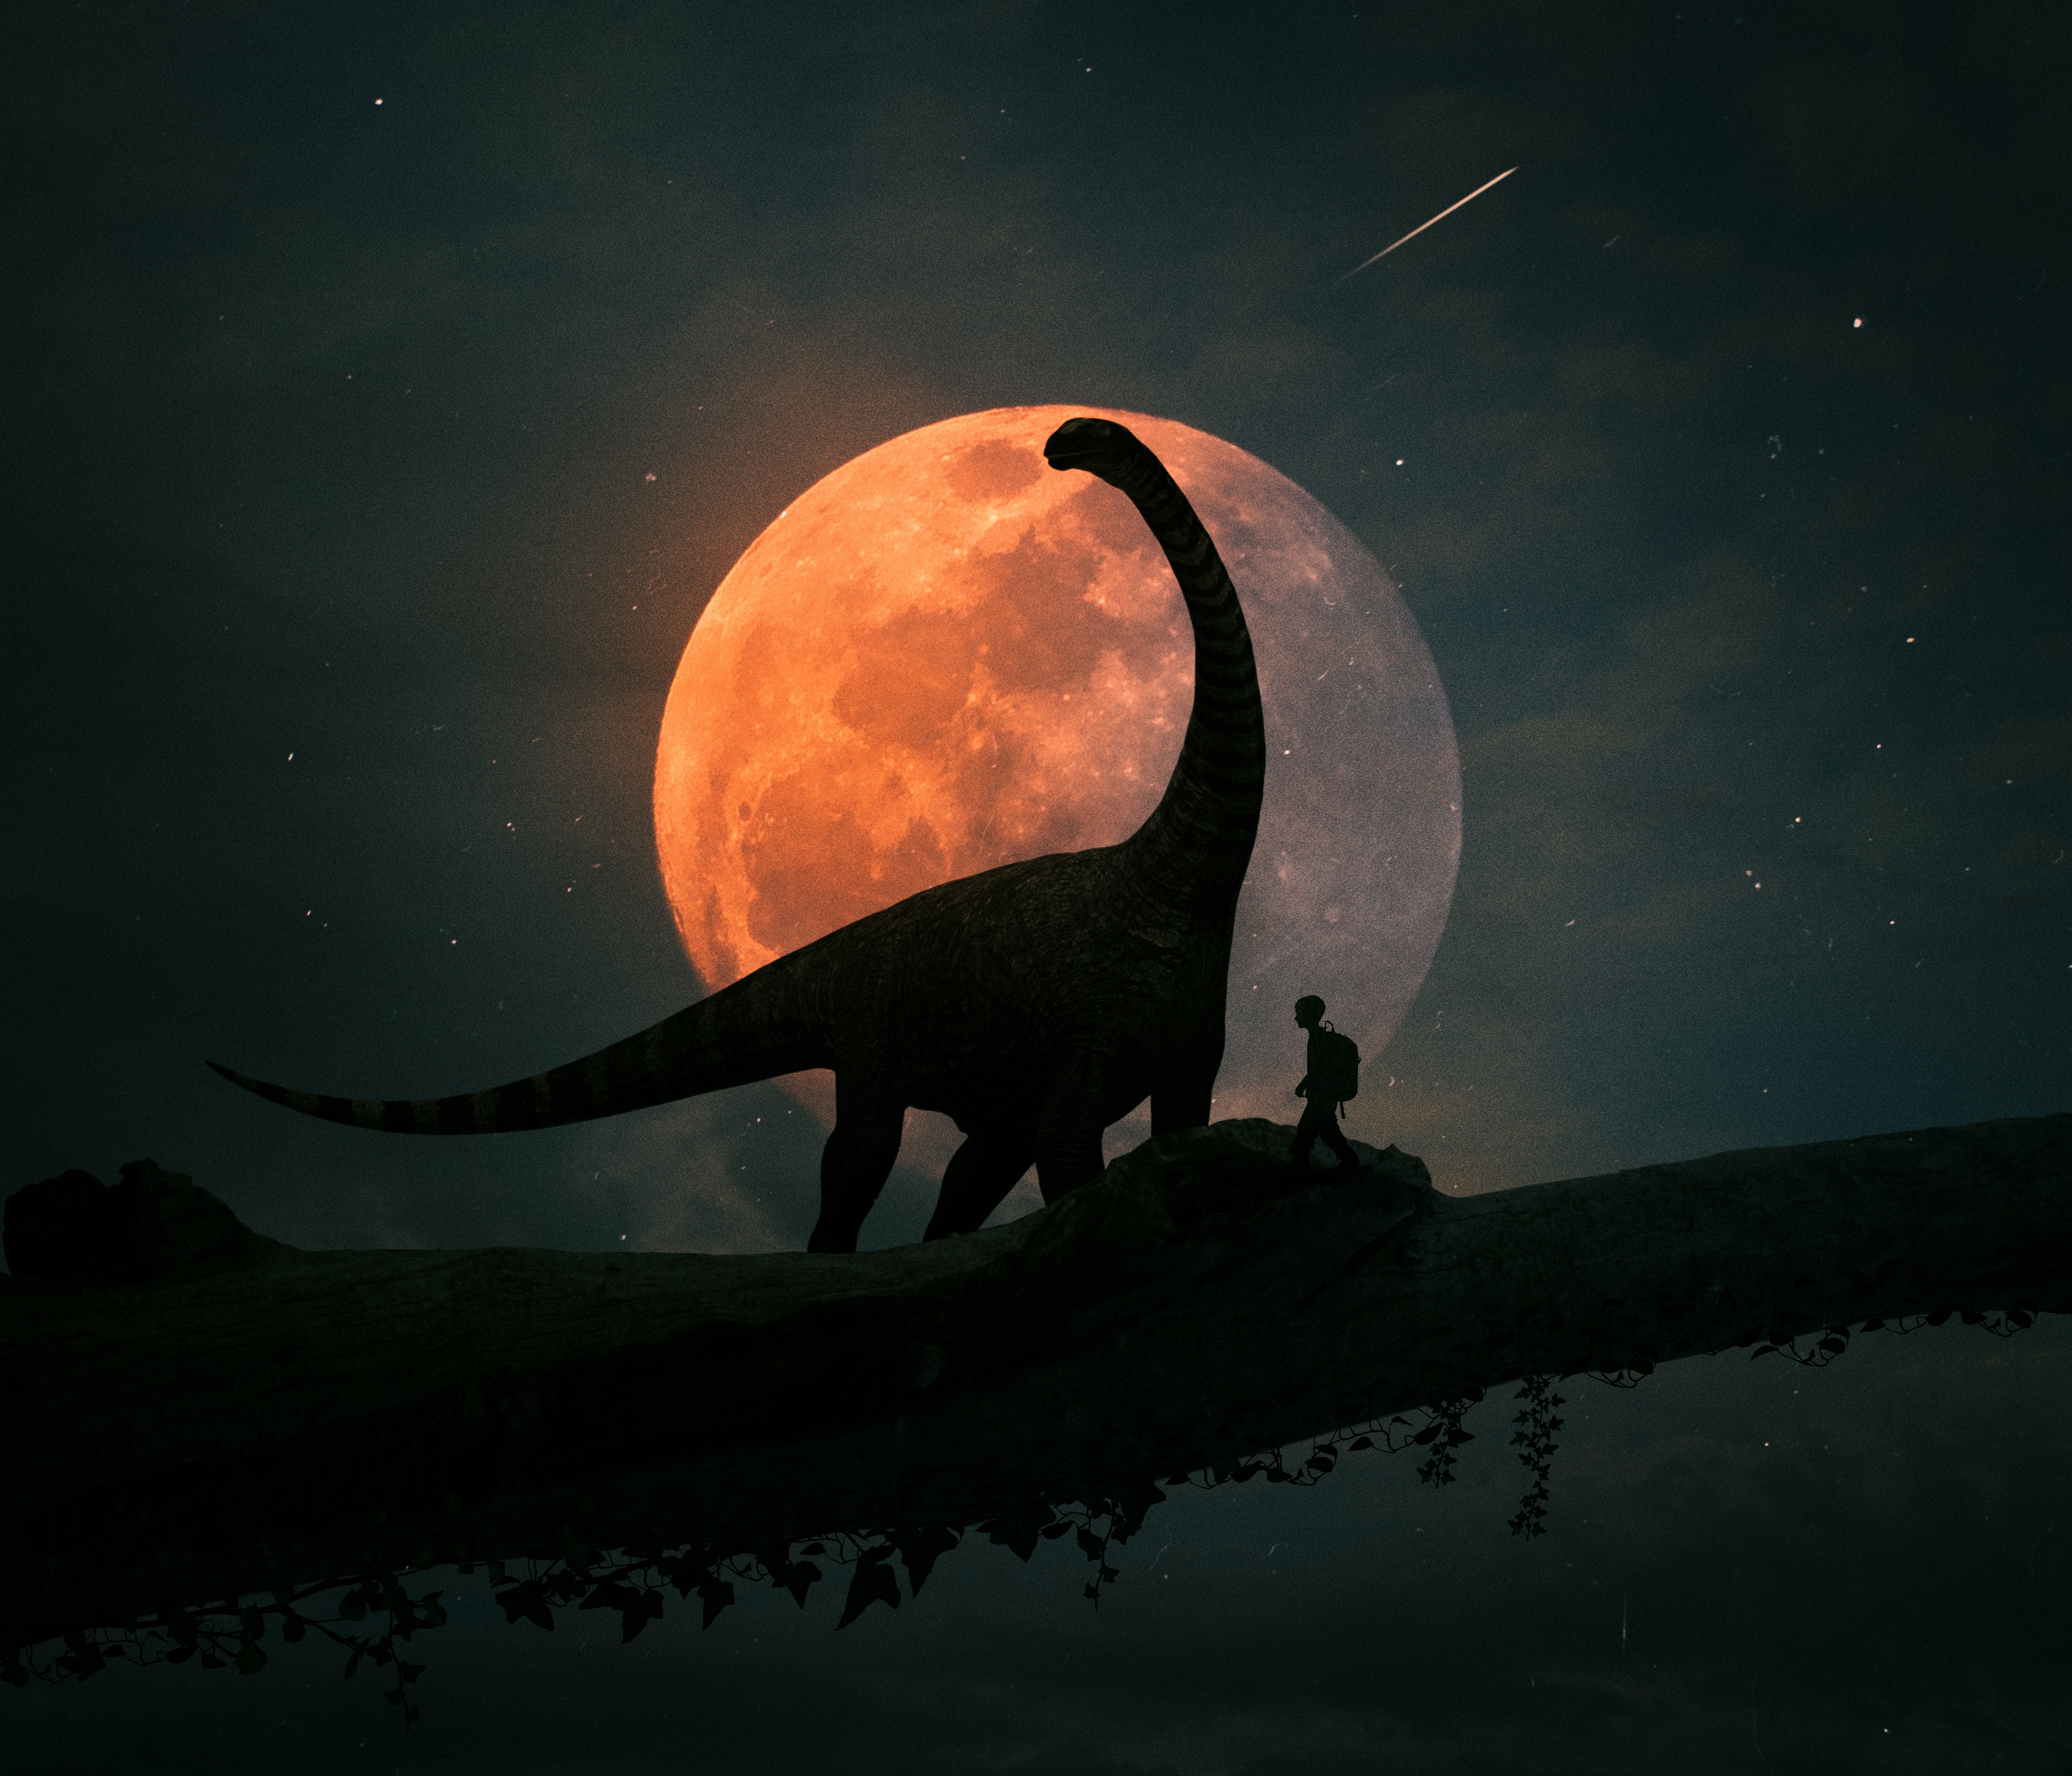 HD wallpaper, Dinosaur, Kid, Travel, Moon, Silhouette, Discover, Night